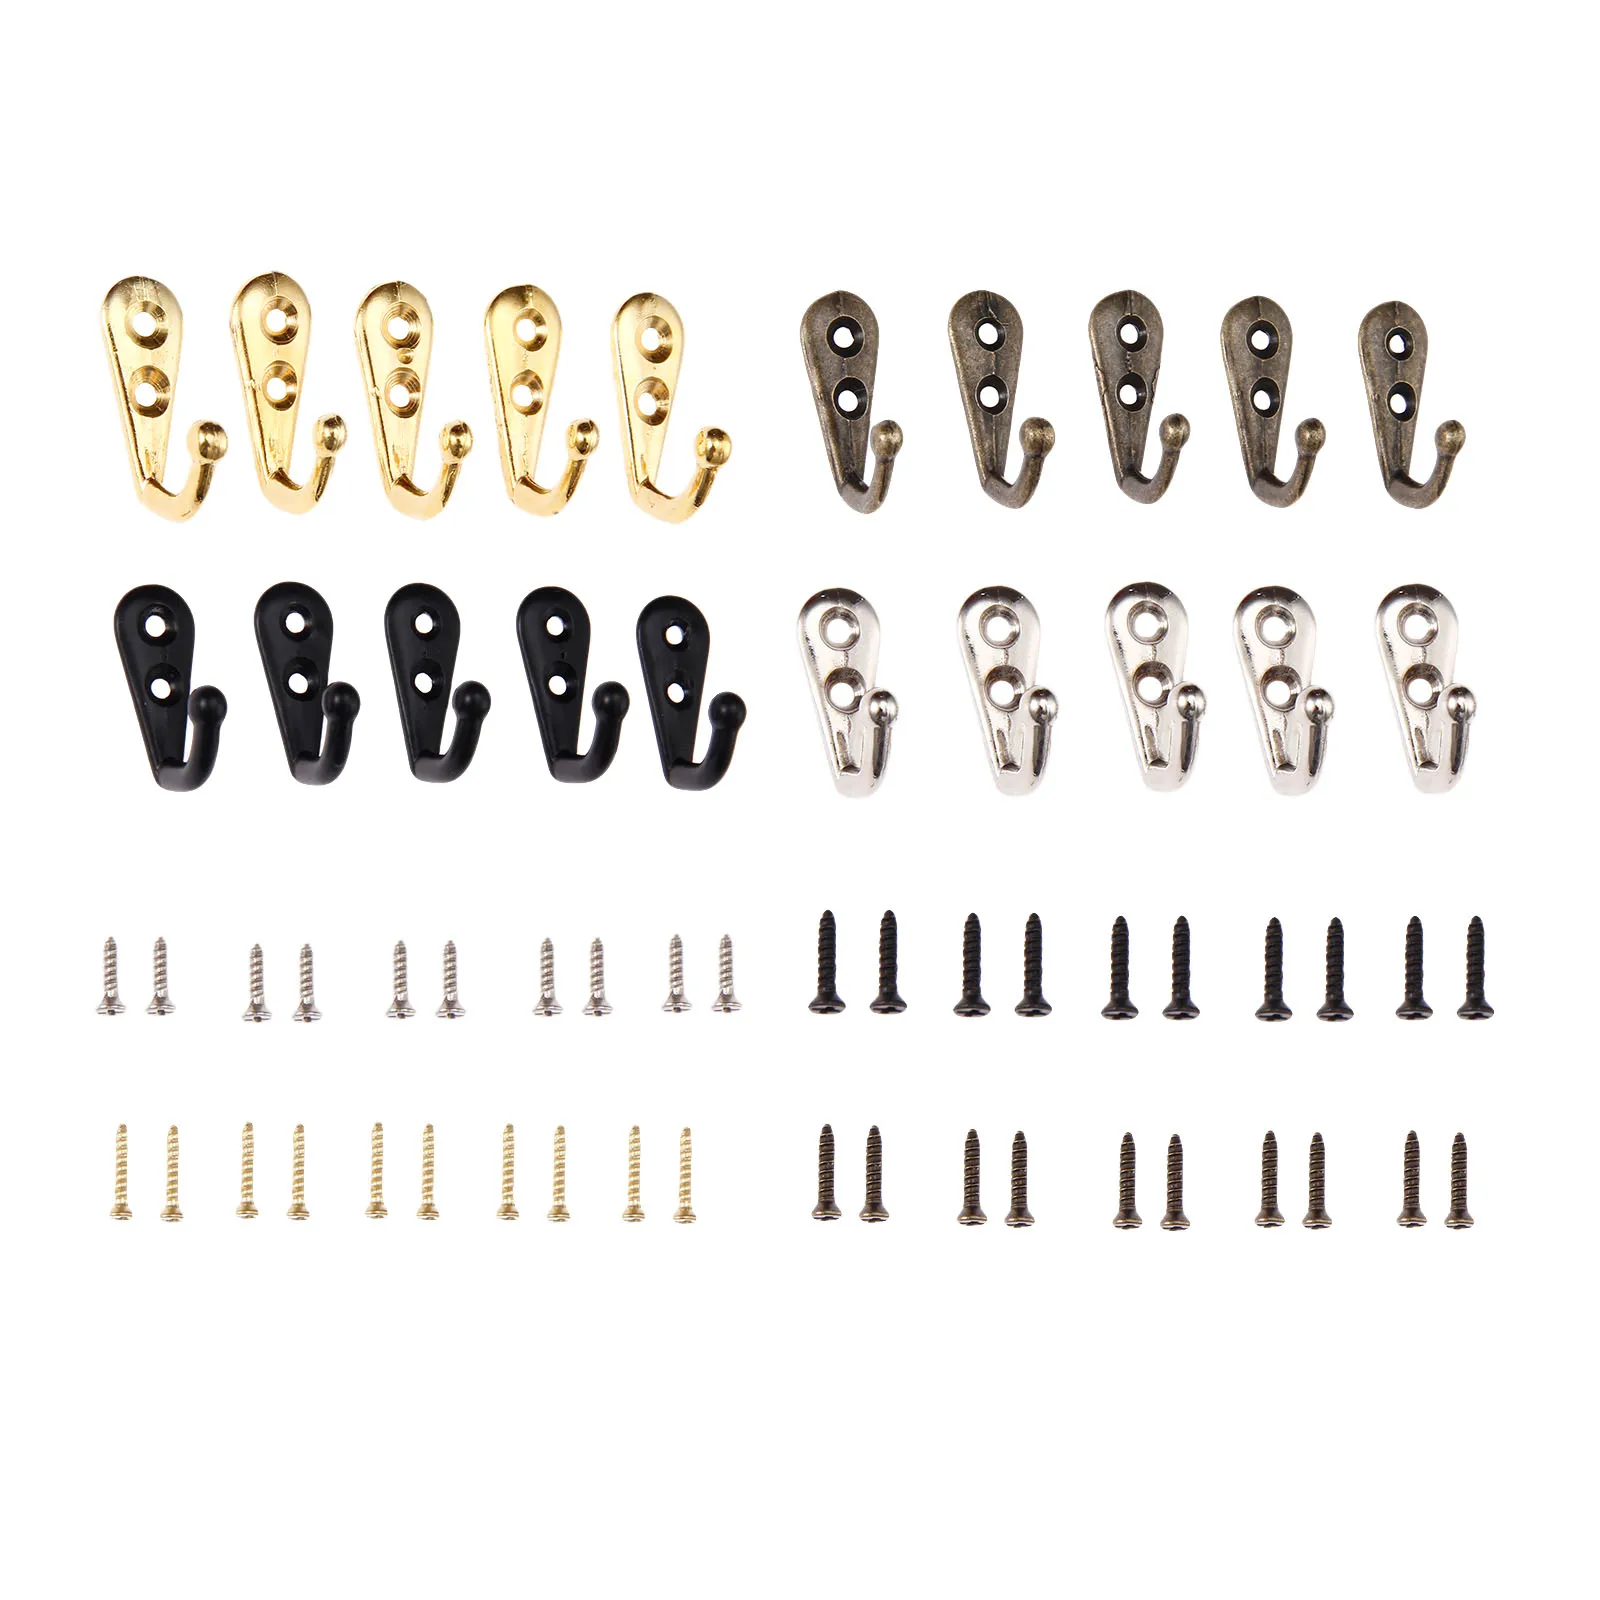 5pcs Hooks Wall Mounted Hanger w/screws Black/Gold/Silver/Antique bronze Coat/Key/Bag/Towel/Hat Holder Decor Bathroom Kitchen